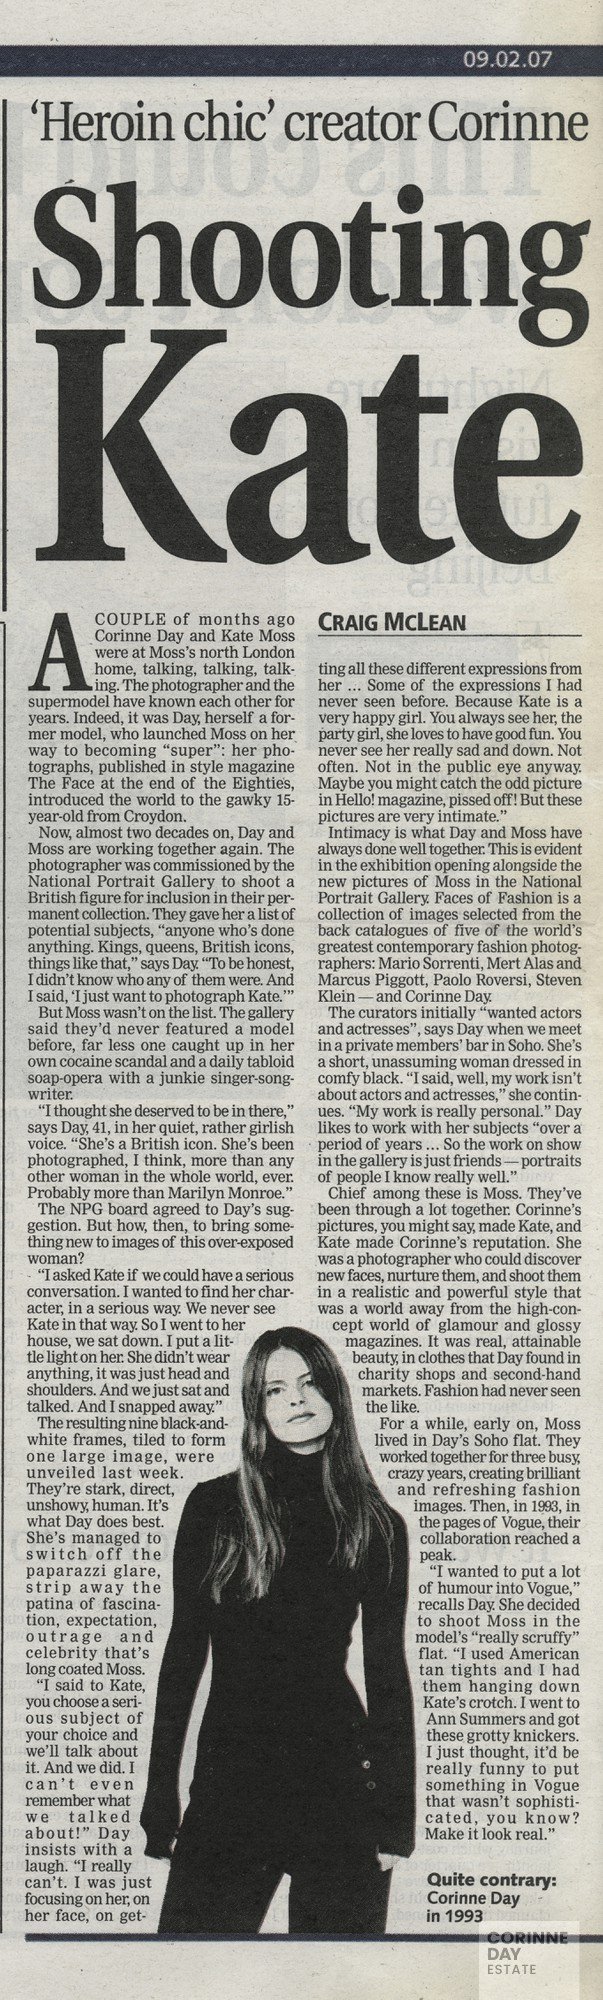 Heroin chic' creator Corinne Shooting Kate, Evening Standard, 9 Feb 2007 — Image 1 of 1